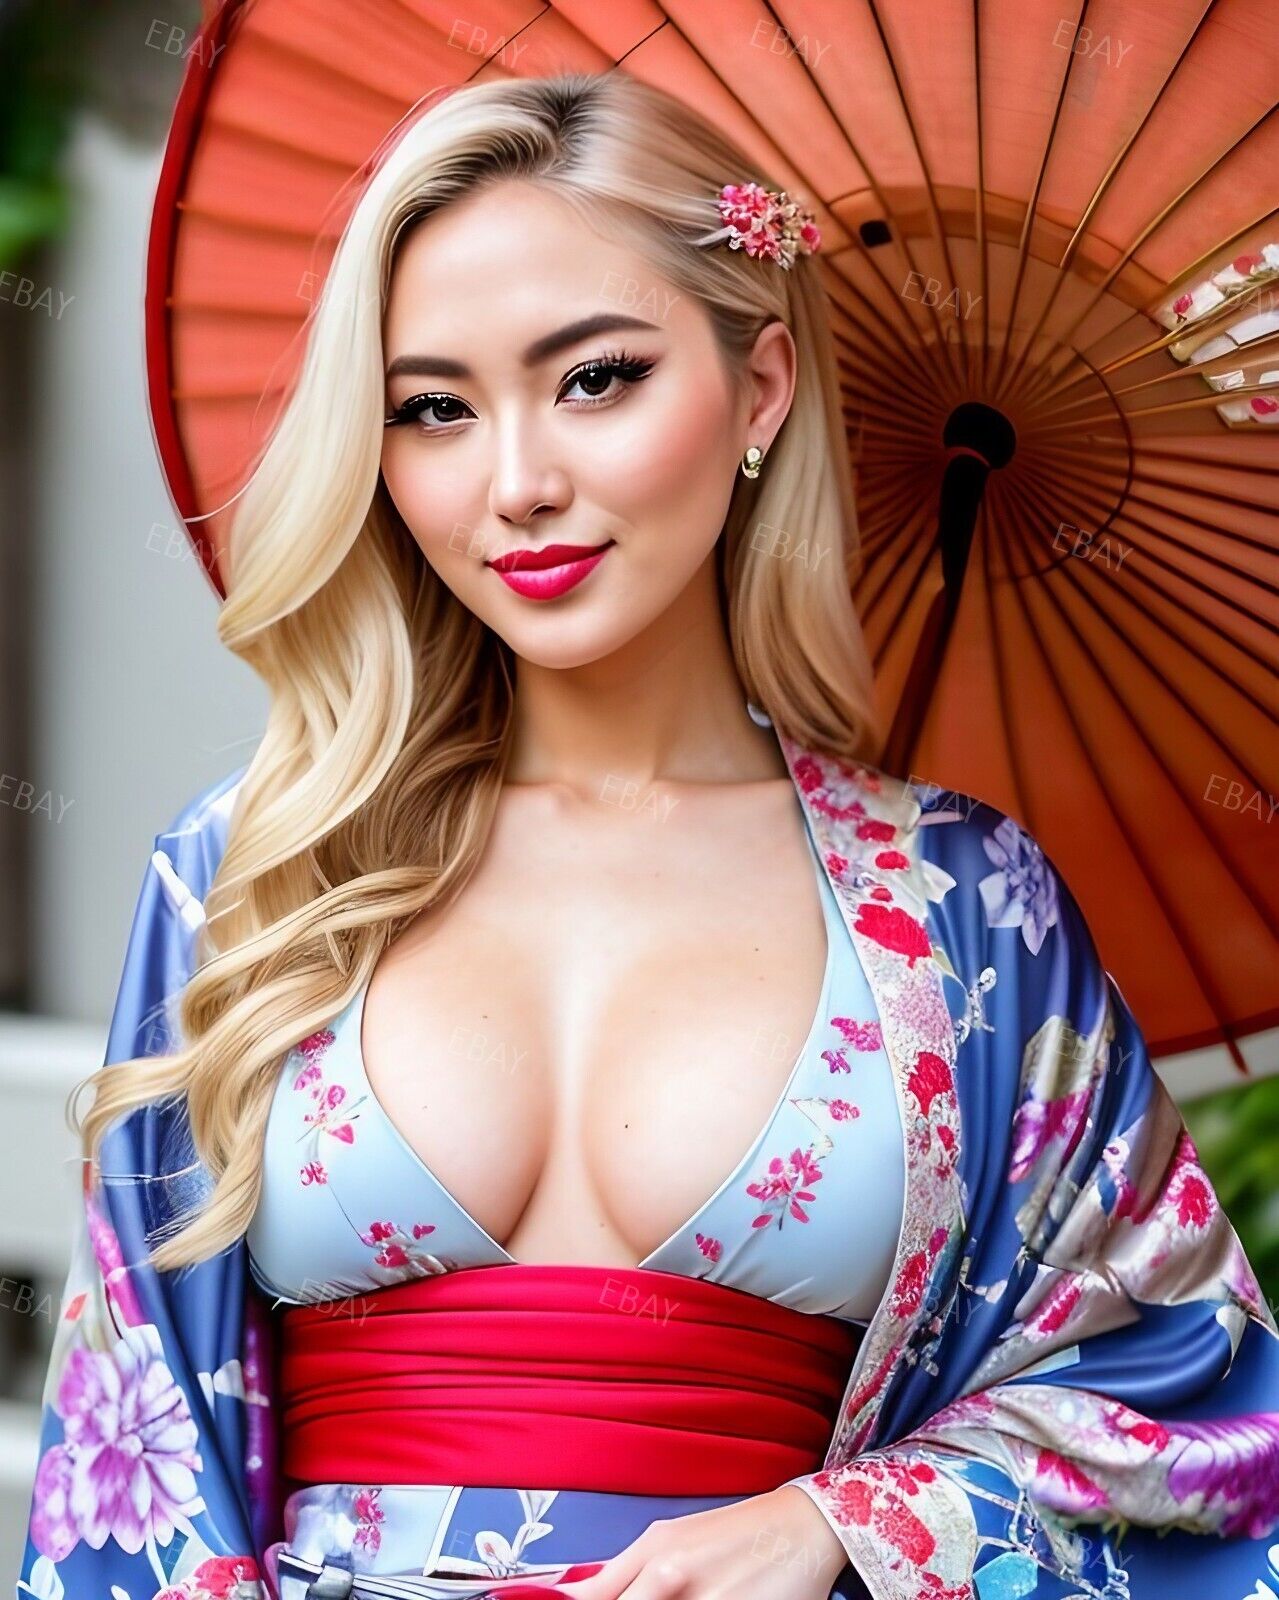 Asian Blonde Girl Model Photo Risque 8x10 Art Print C257